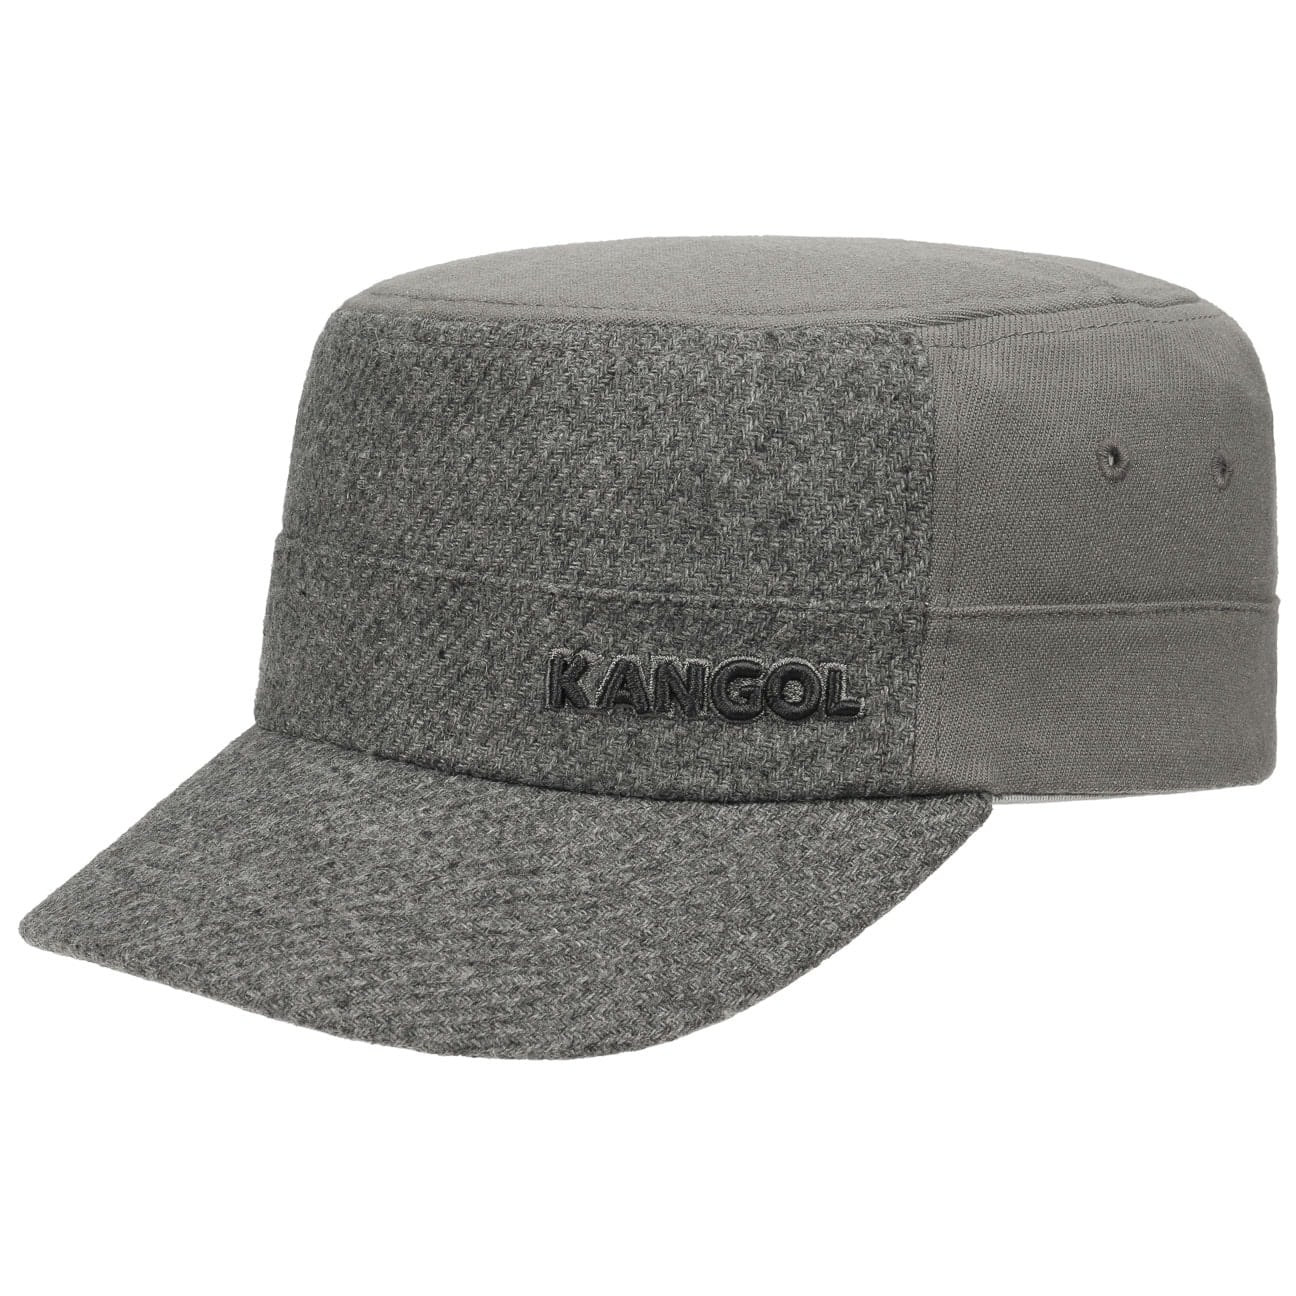 Textured Flexfit Army Cap by Kangol